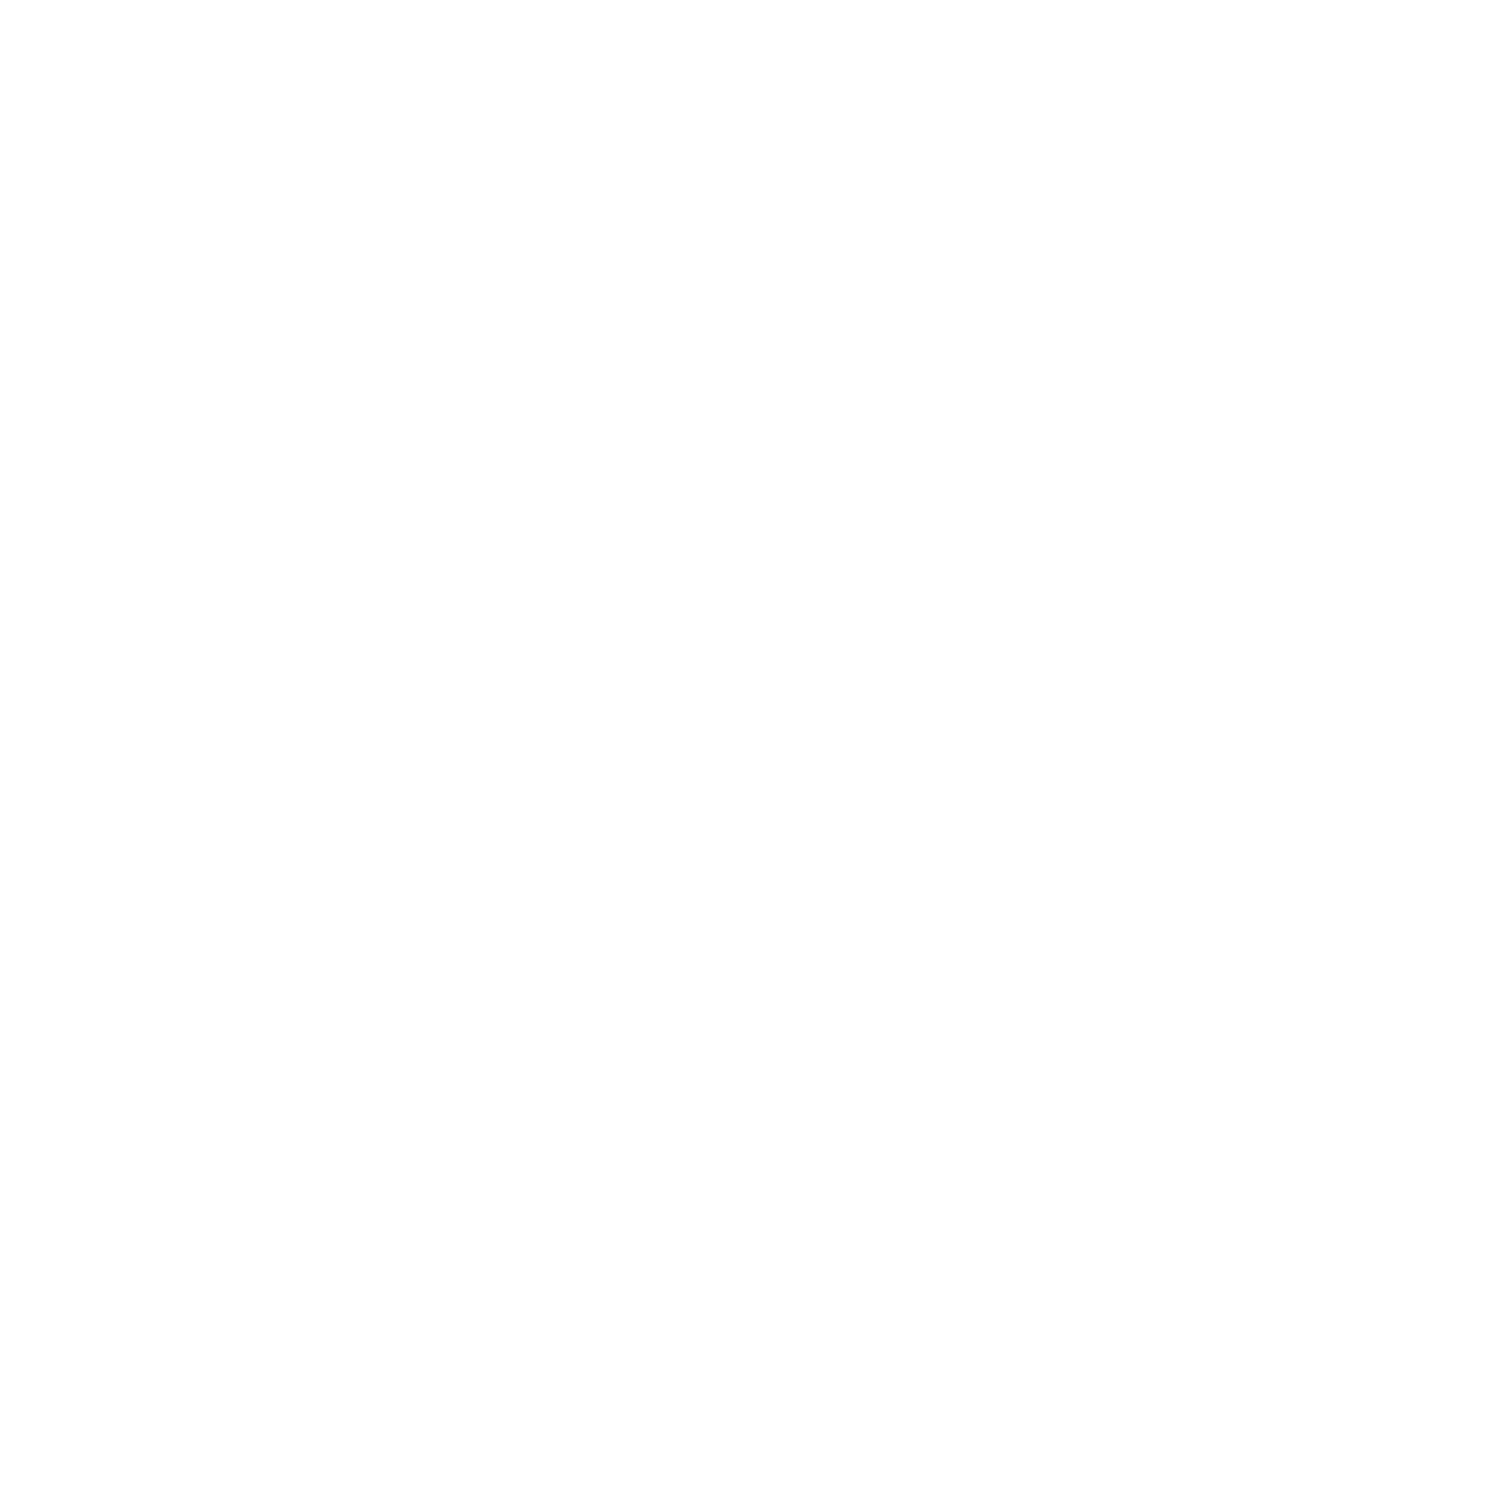 Portland General Electric logo in white